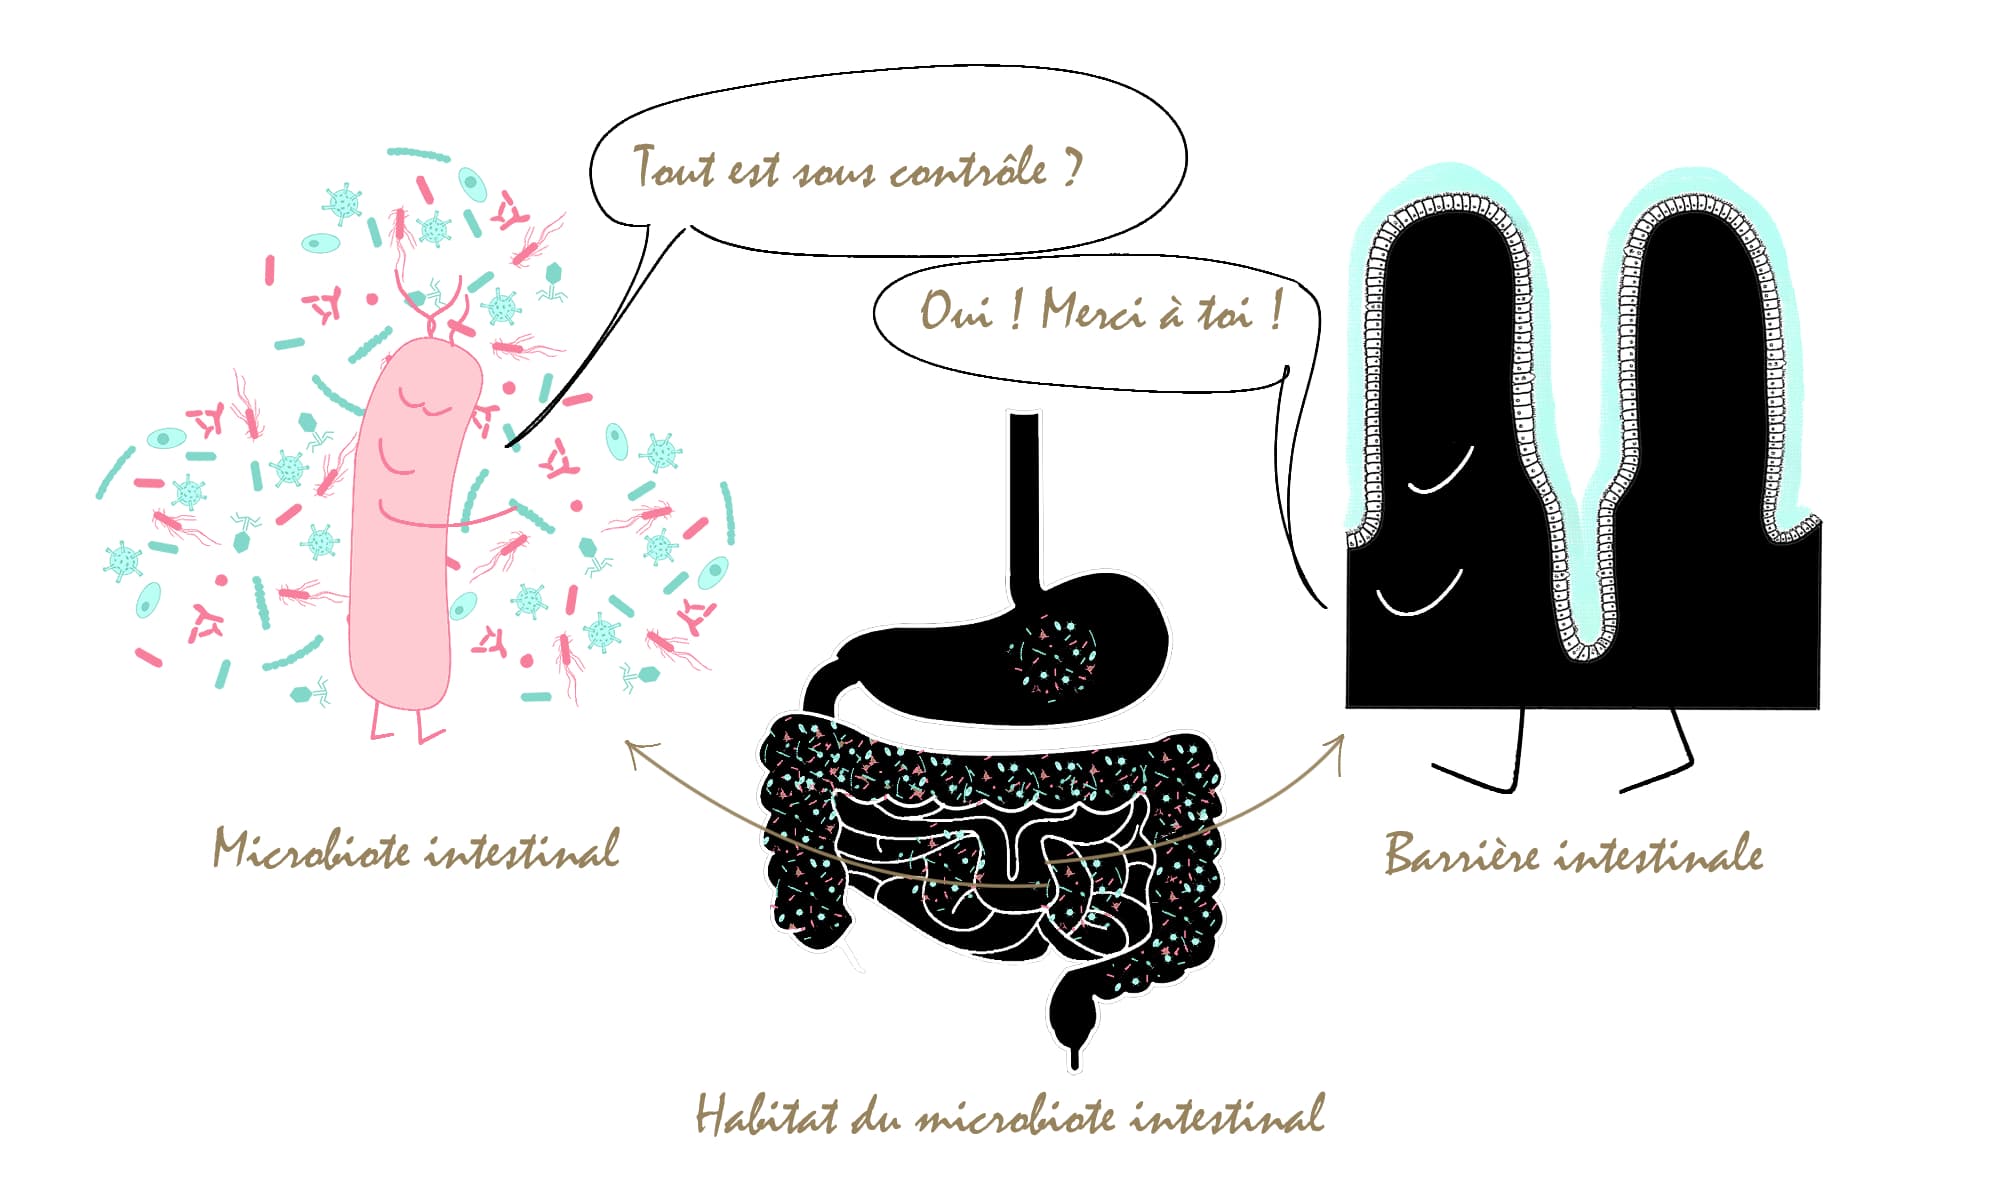 Le microbiote intestinal prend soin de la barrière intestinale